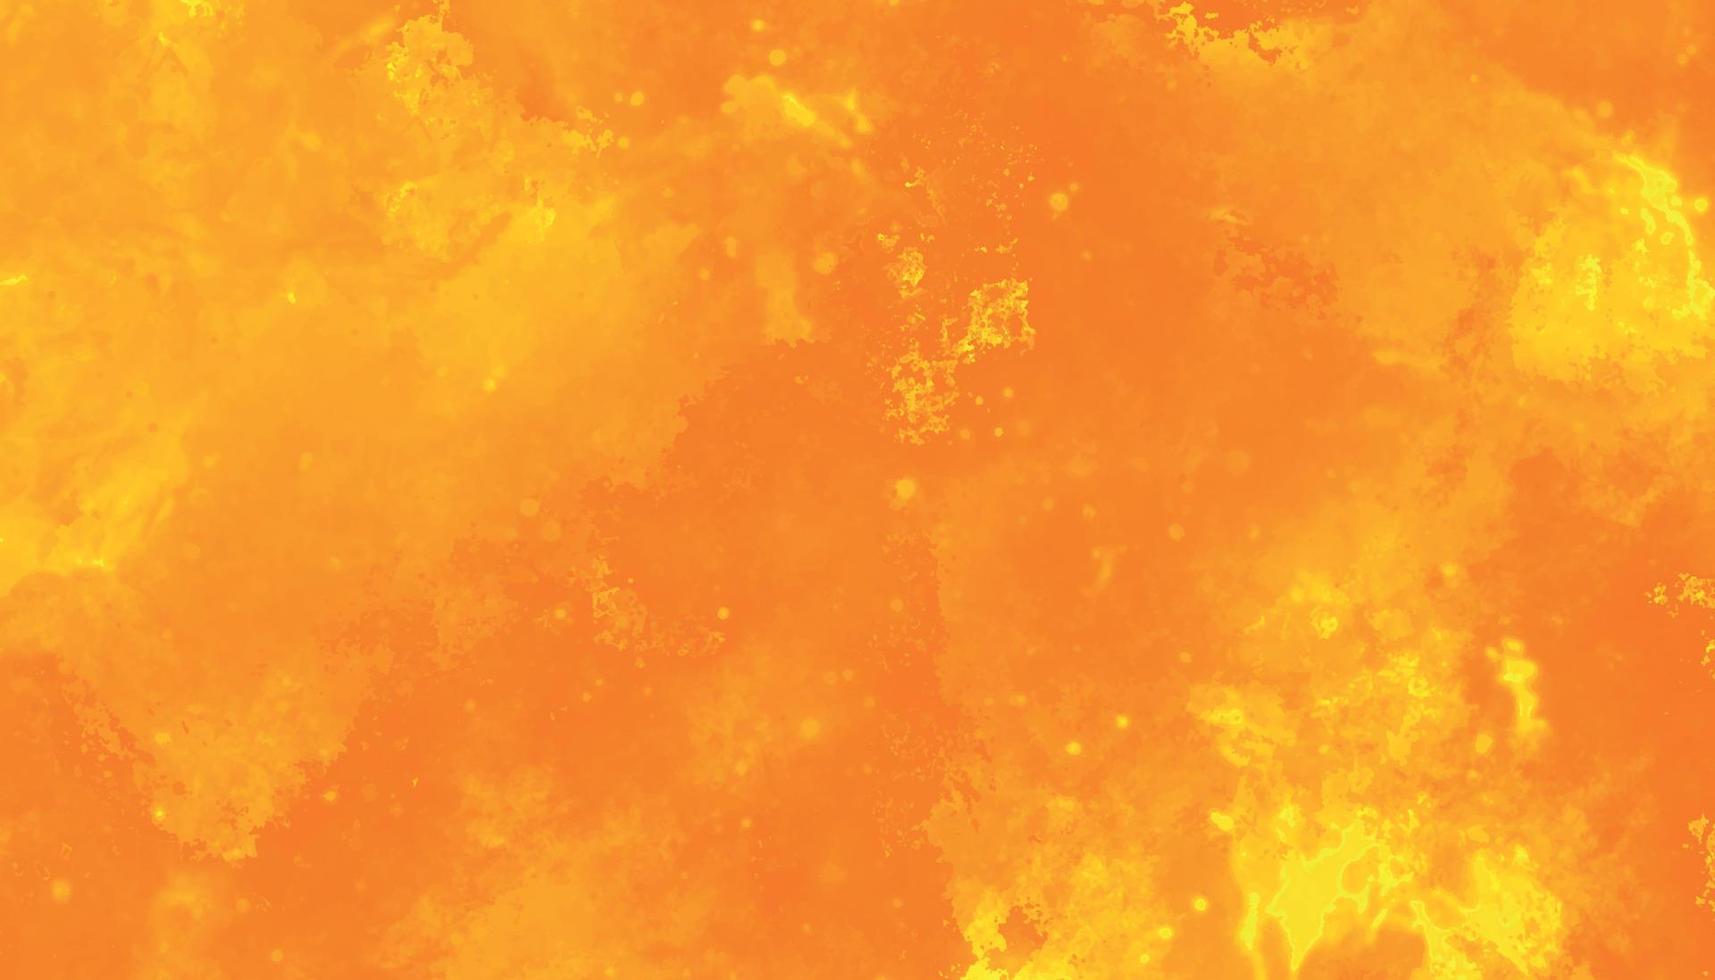 achtergrond met oranje. brand achtergrond. abstract oranje waterverf achtergrond. oranje grunge penseel structuur vector illustratie.